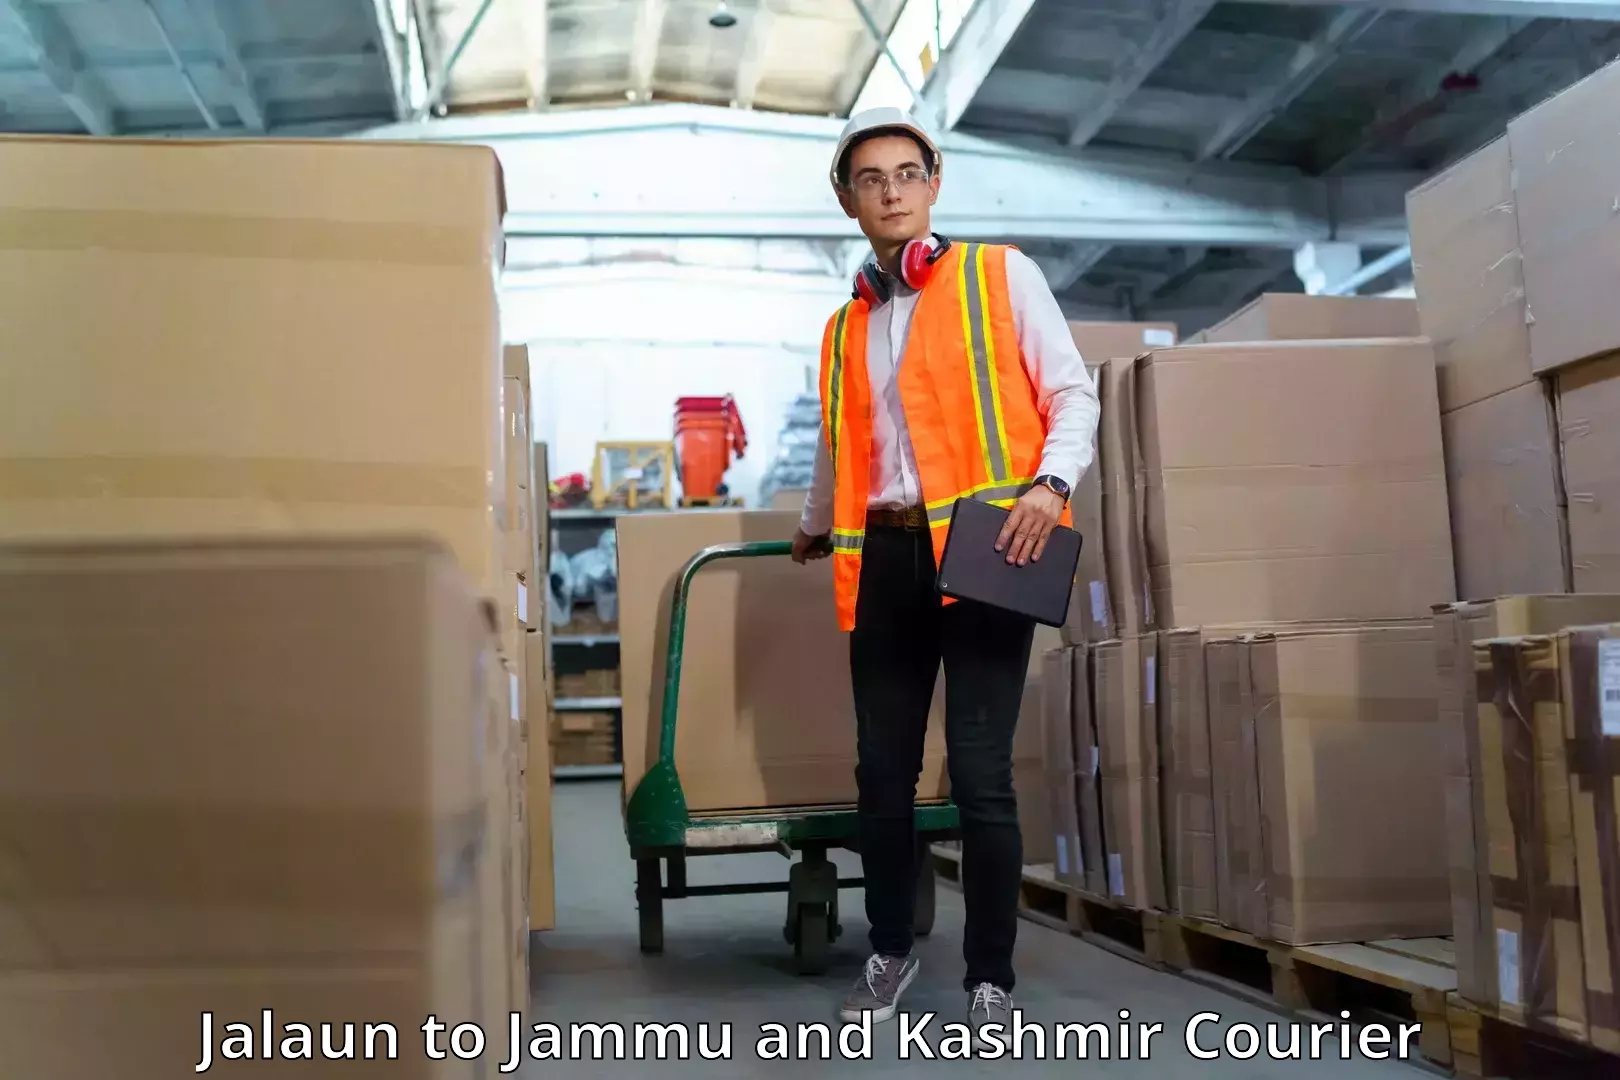 Courier service comparison in Jalaun to Kathua